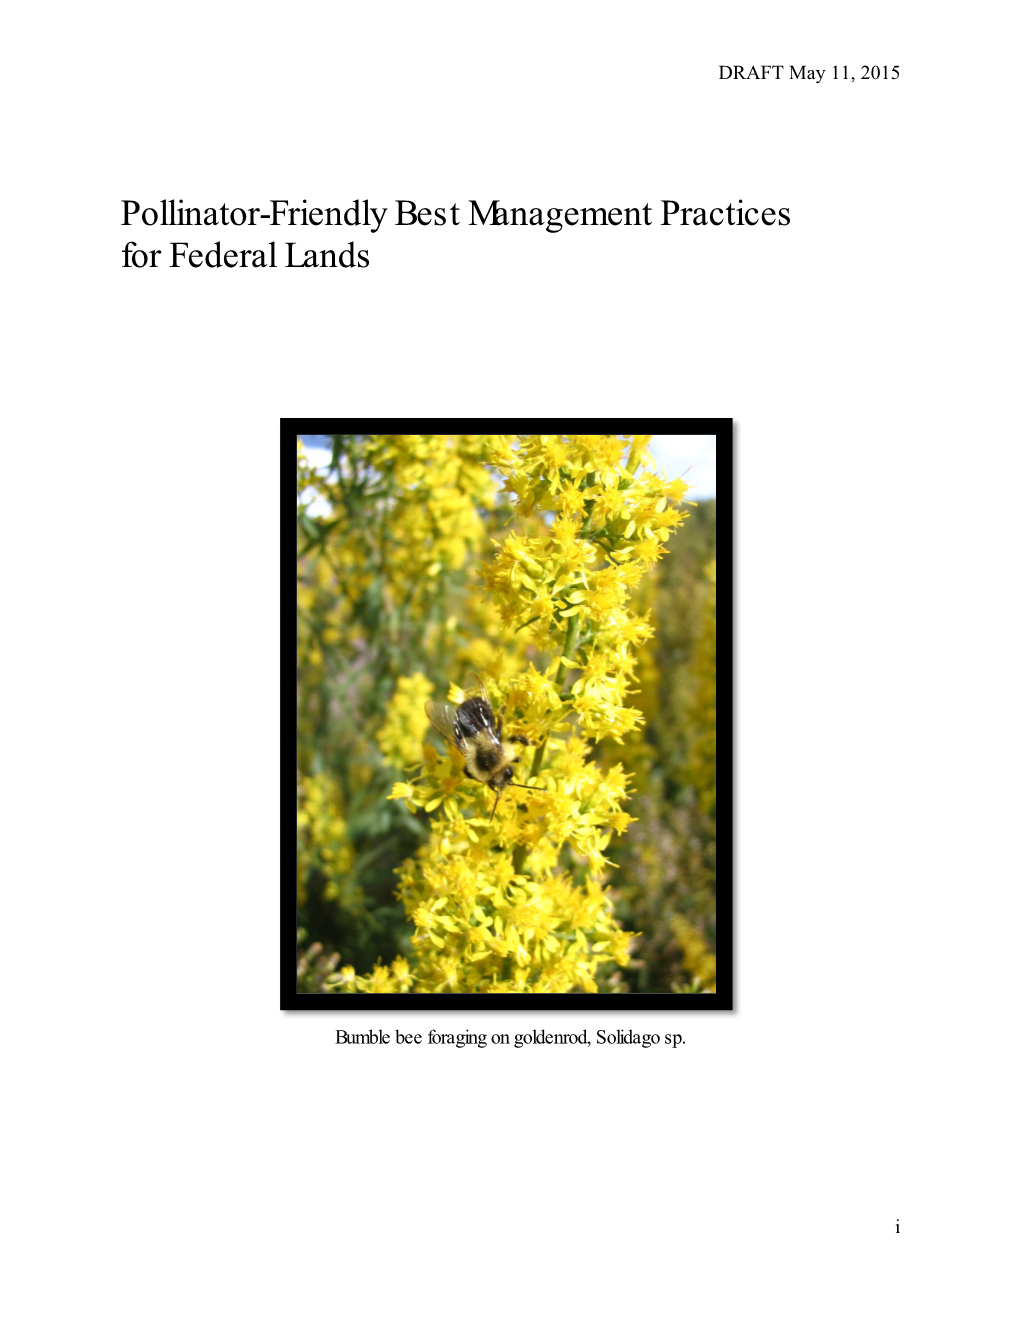 Pollinator-Friendly Best Management Practices for Federal Lands